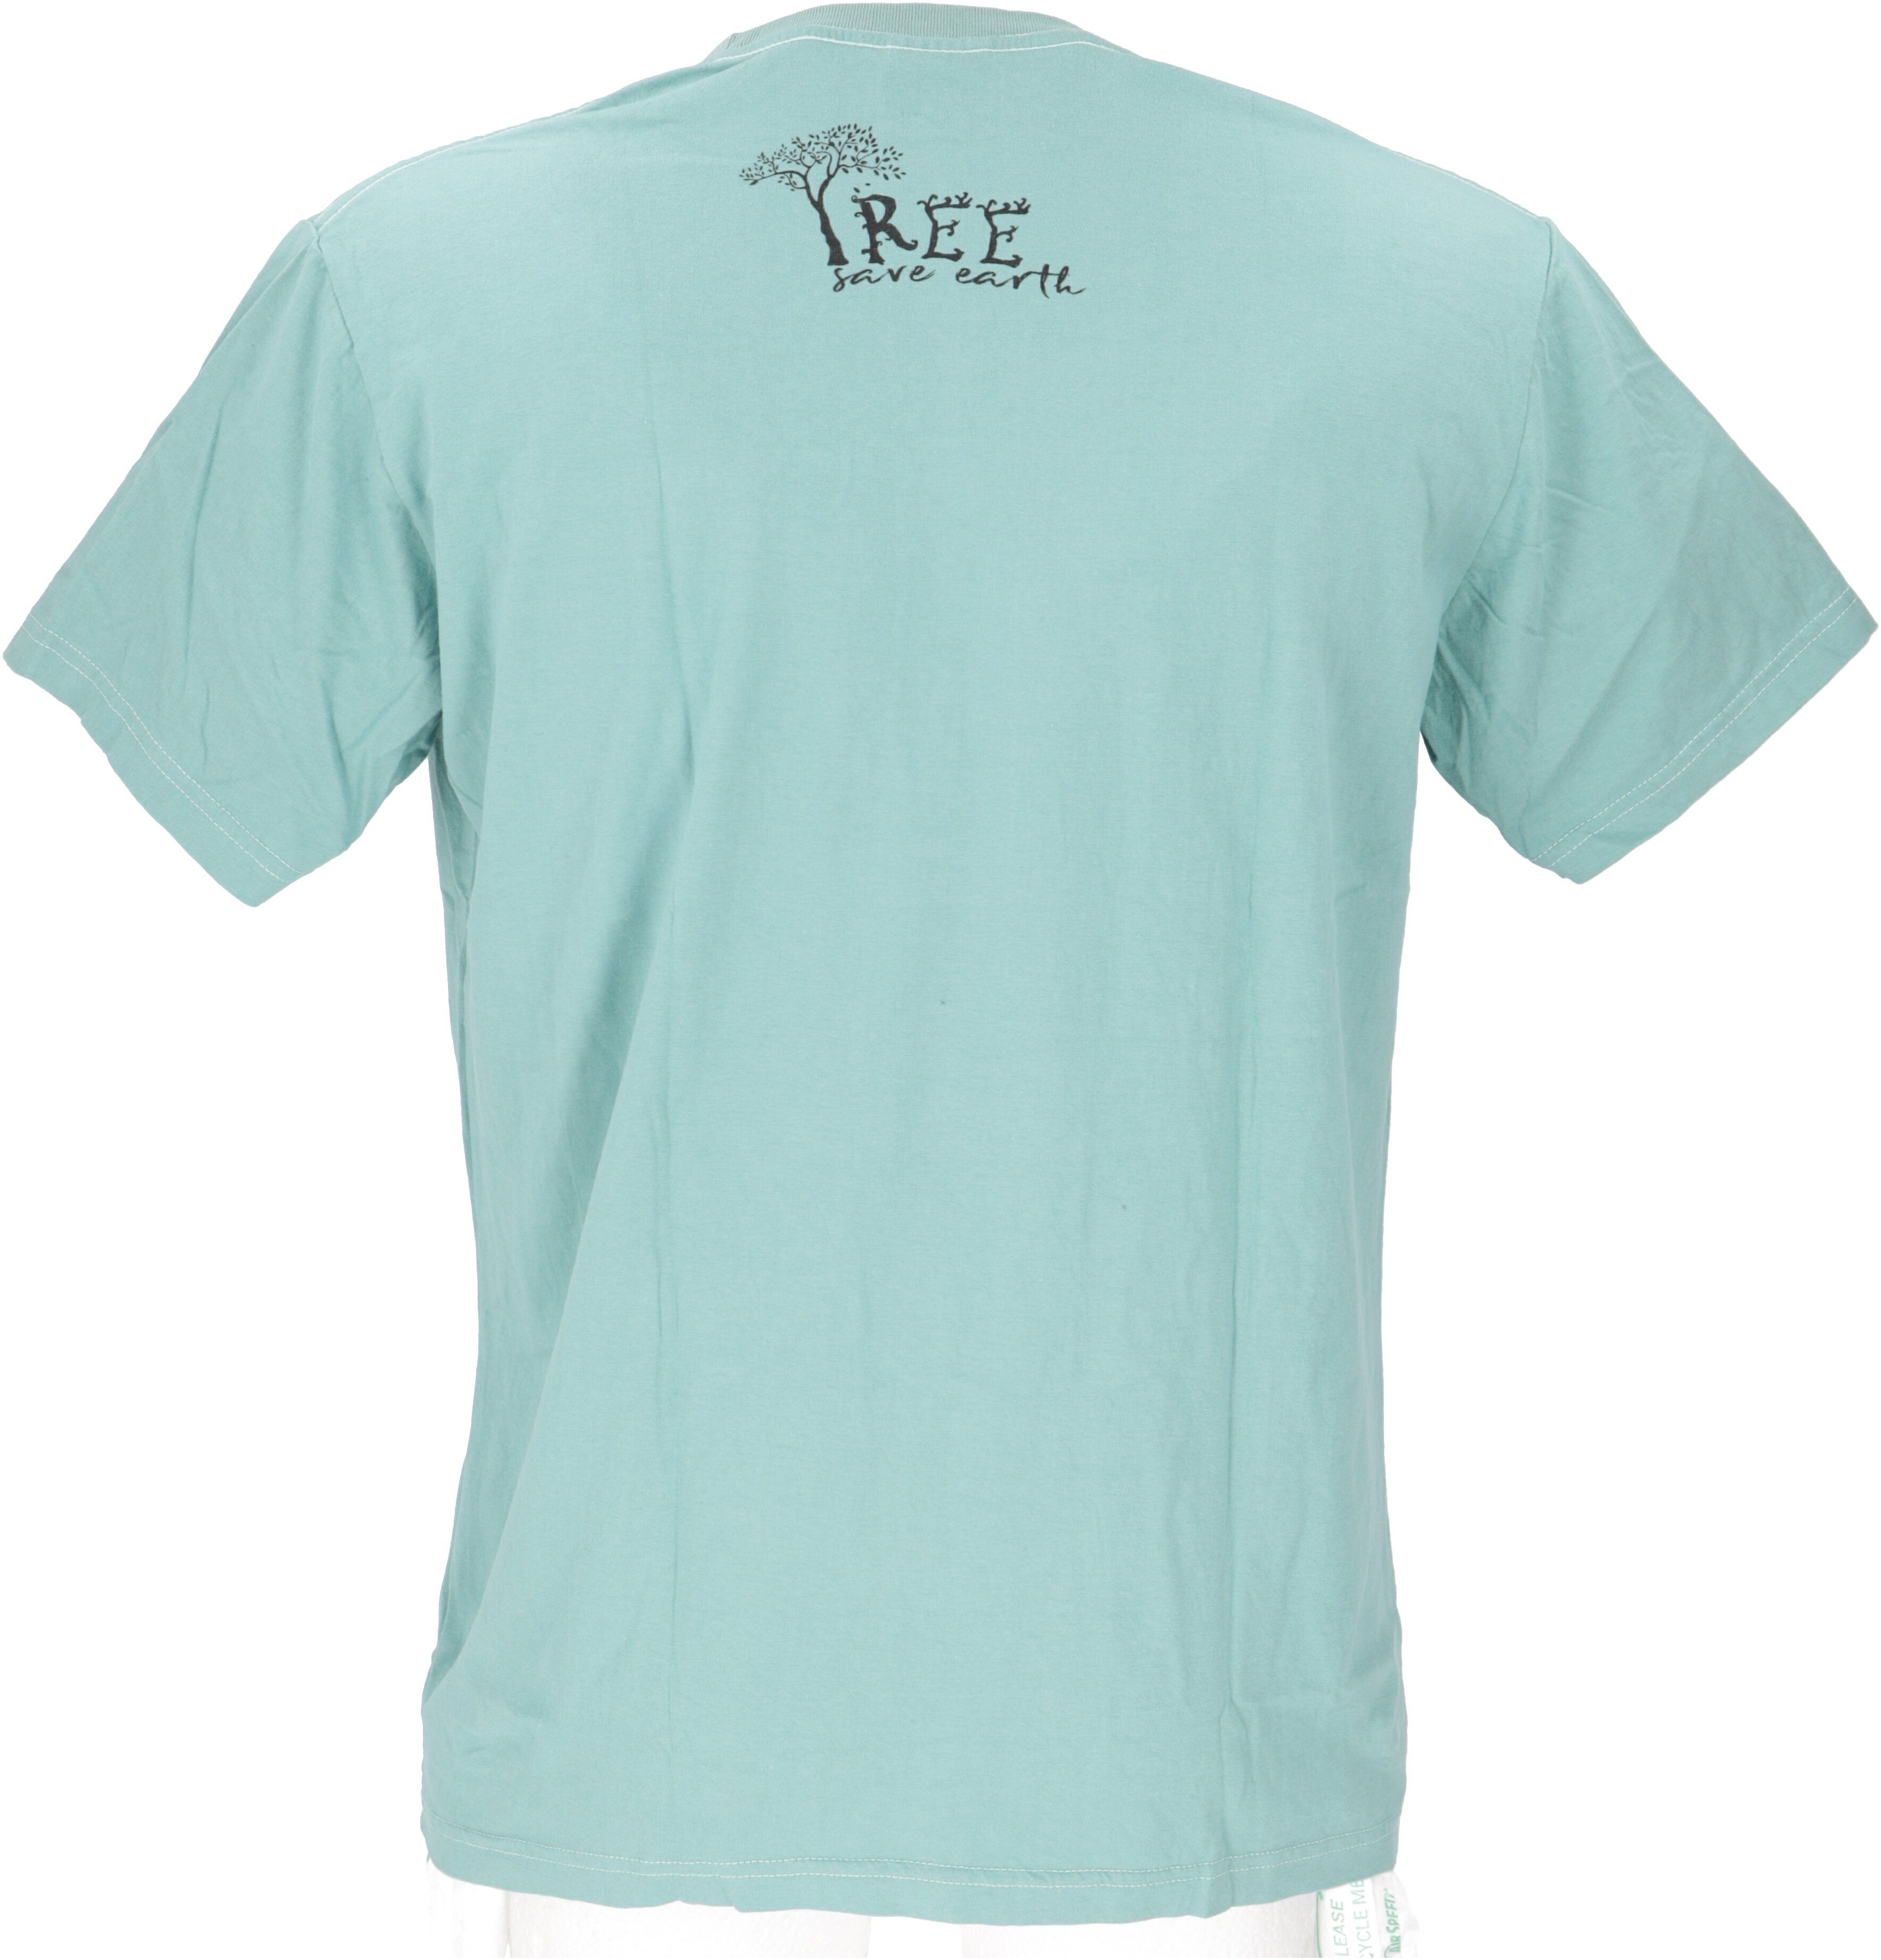 earth Retro T-Shirt, Guru-Shop save Retro Go.. green/aqua T-Shirt Tree T-Shirt Go -